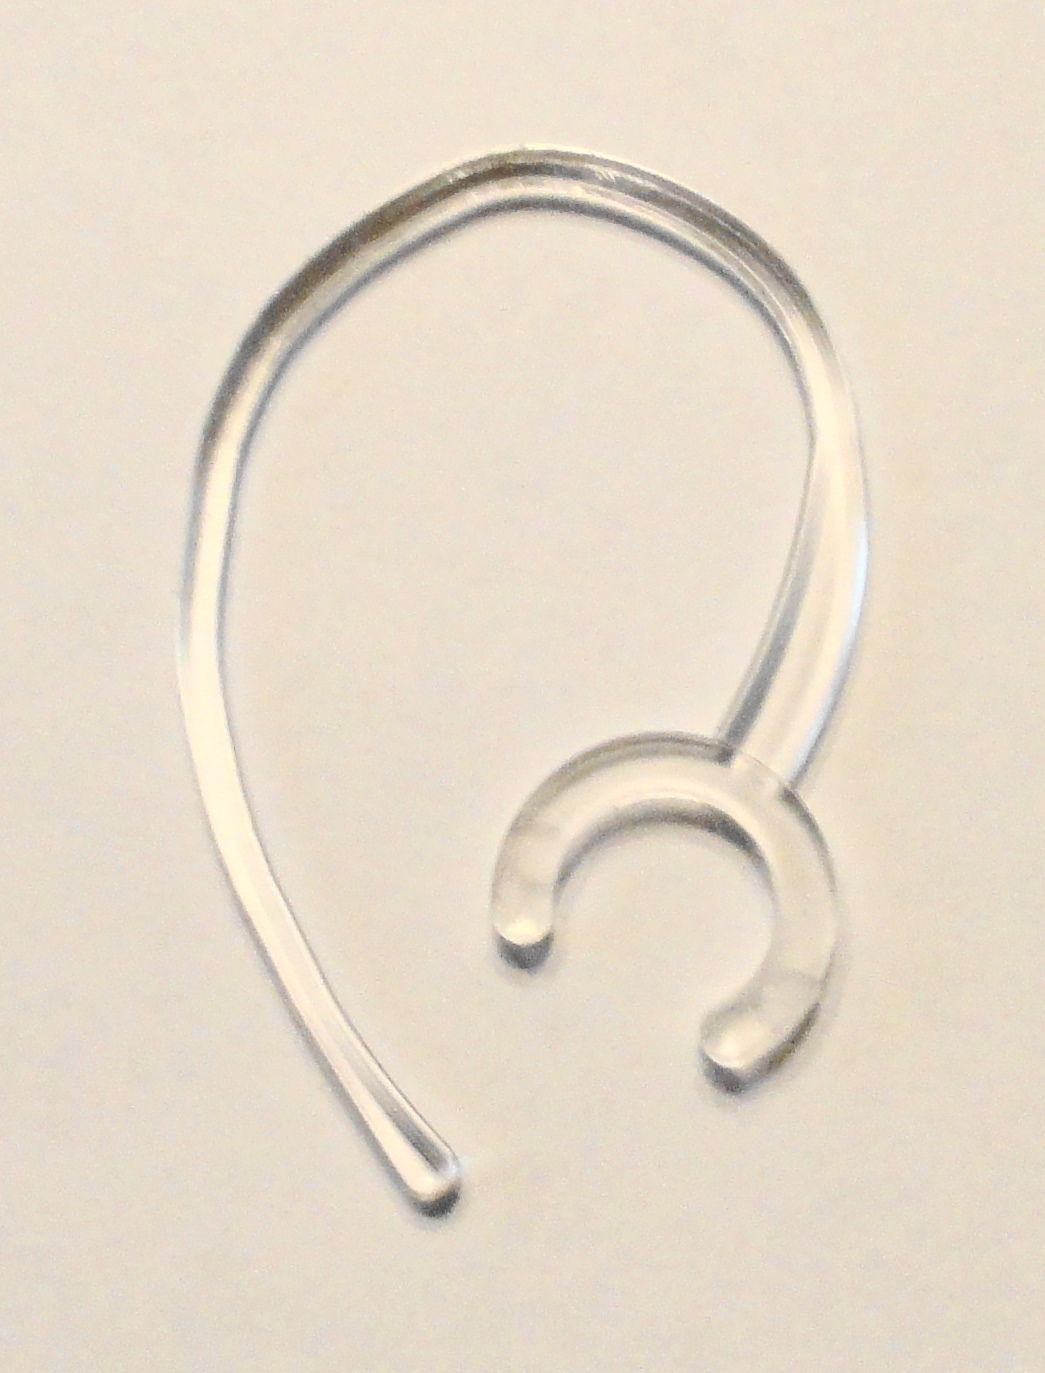 LC Ear hook loop clip Bluetooth Handsfree Motorola Endeavor HX1 Jawbone 2 3 PS3 - $1.49